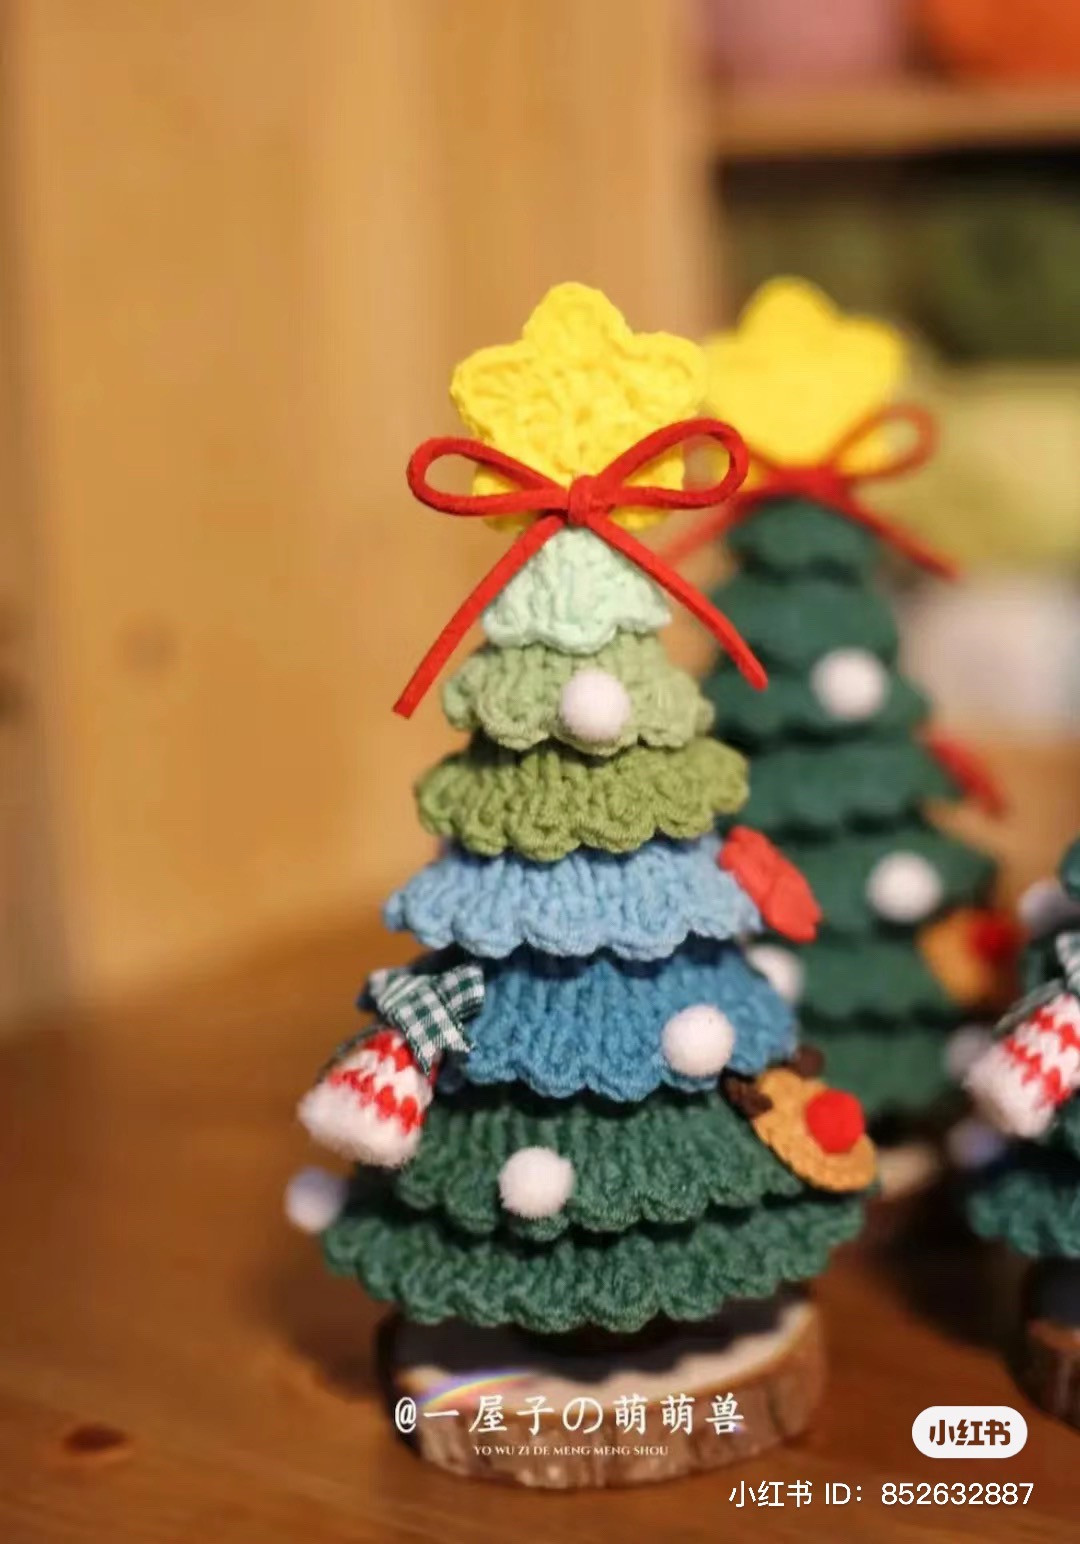 7-layer Christmas tree crochet pattern